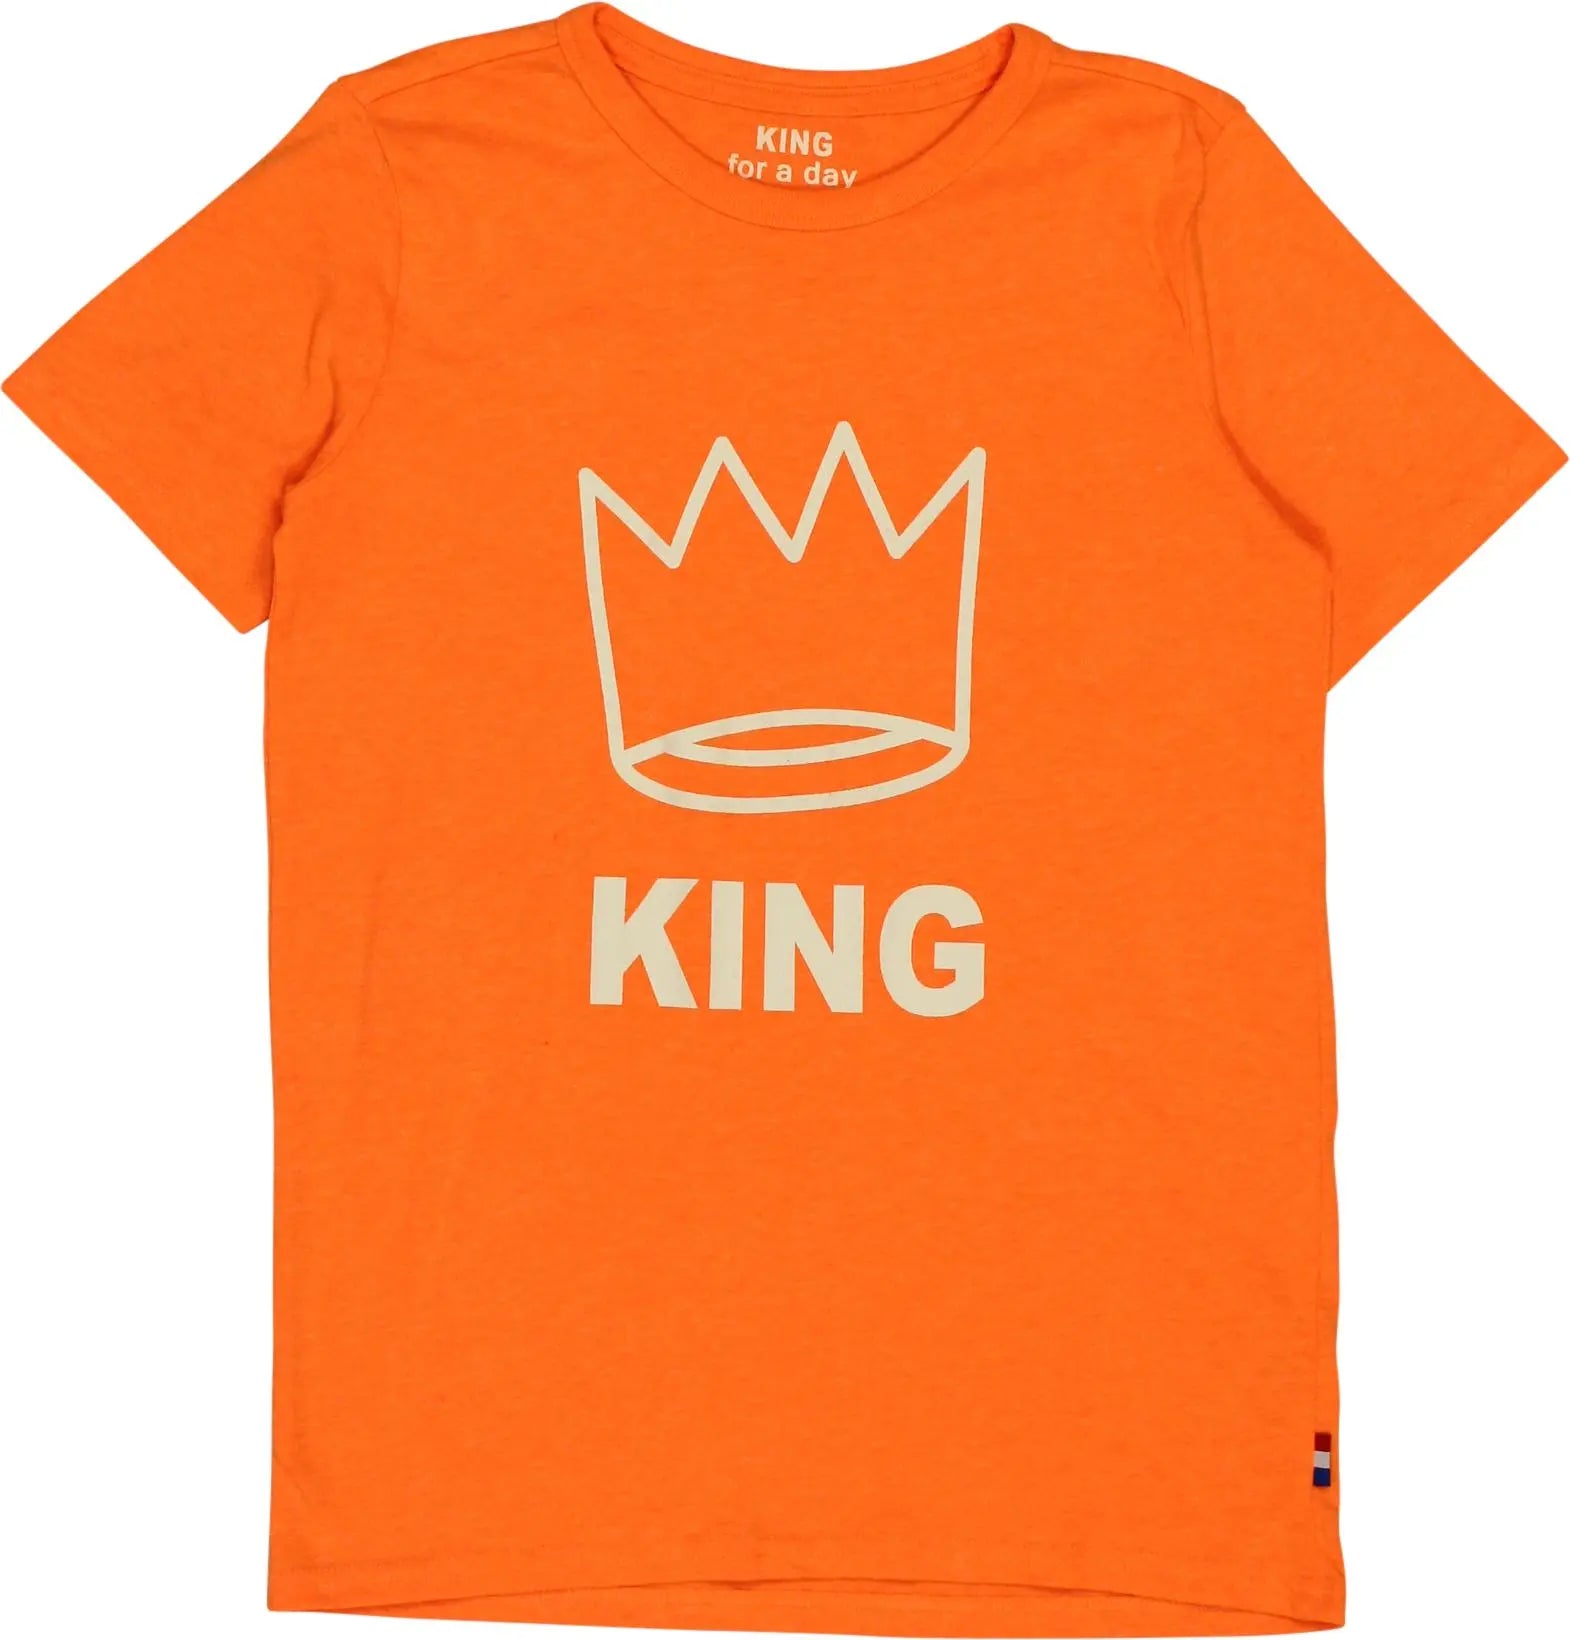 HEMA - Orange T-shirt- ThriftTale.com - Vintage and second handclothing